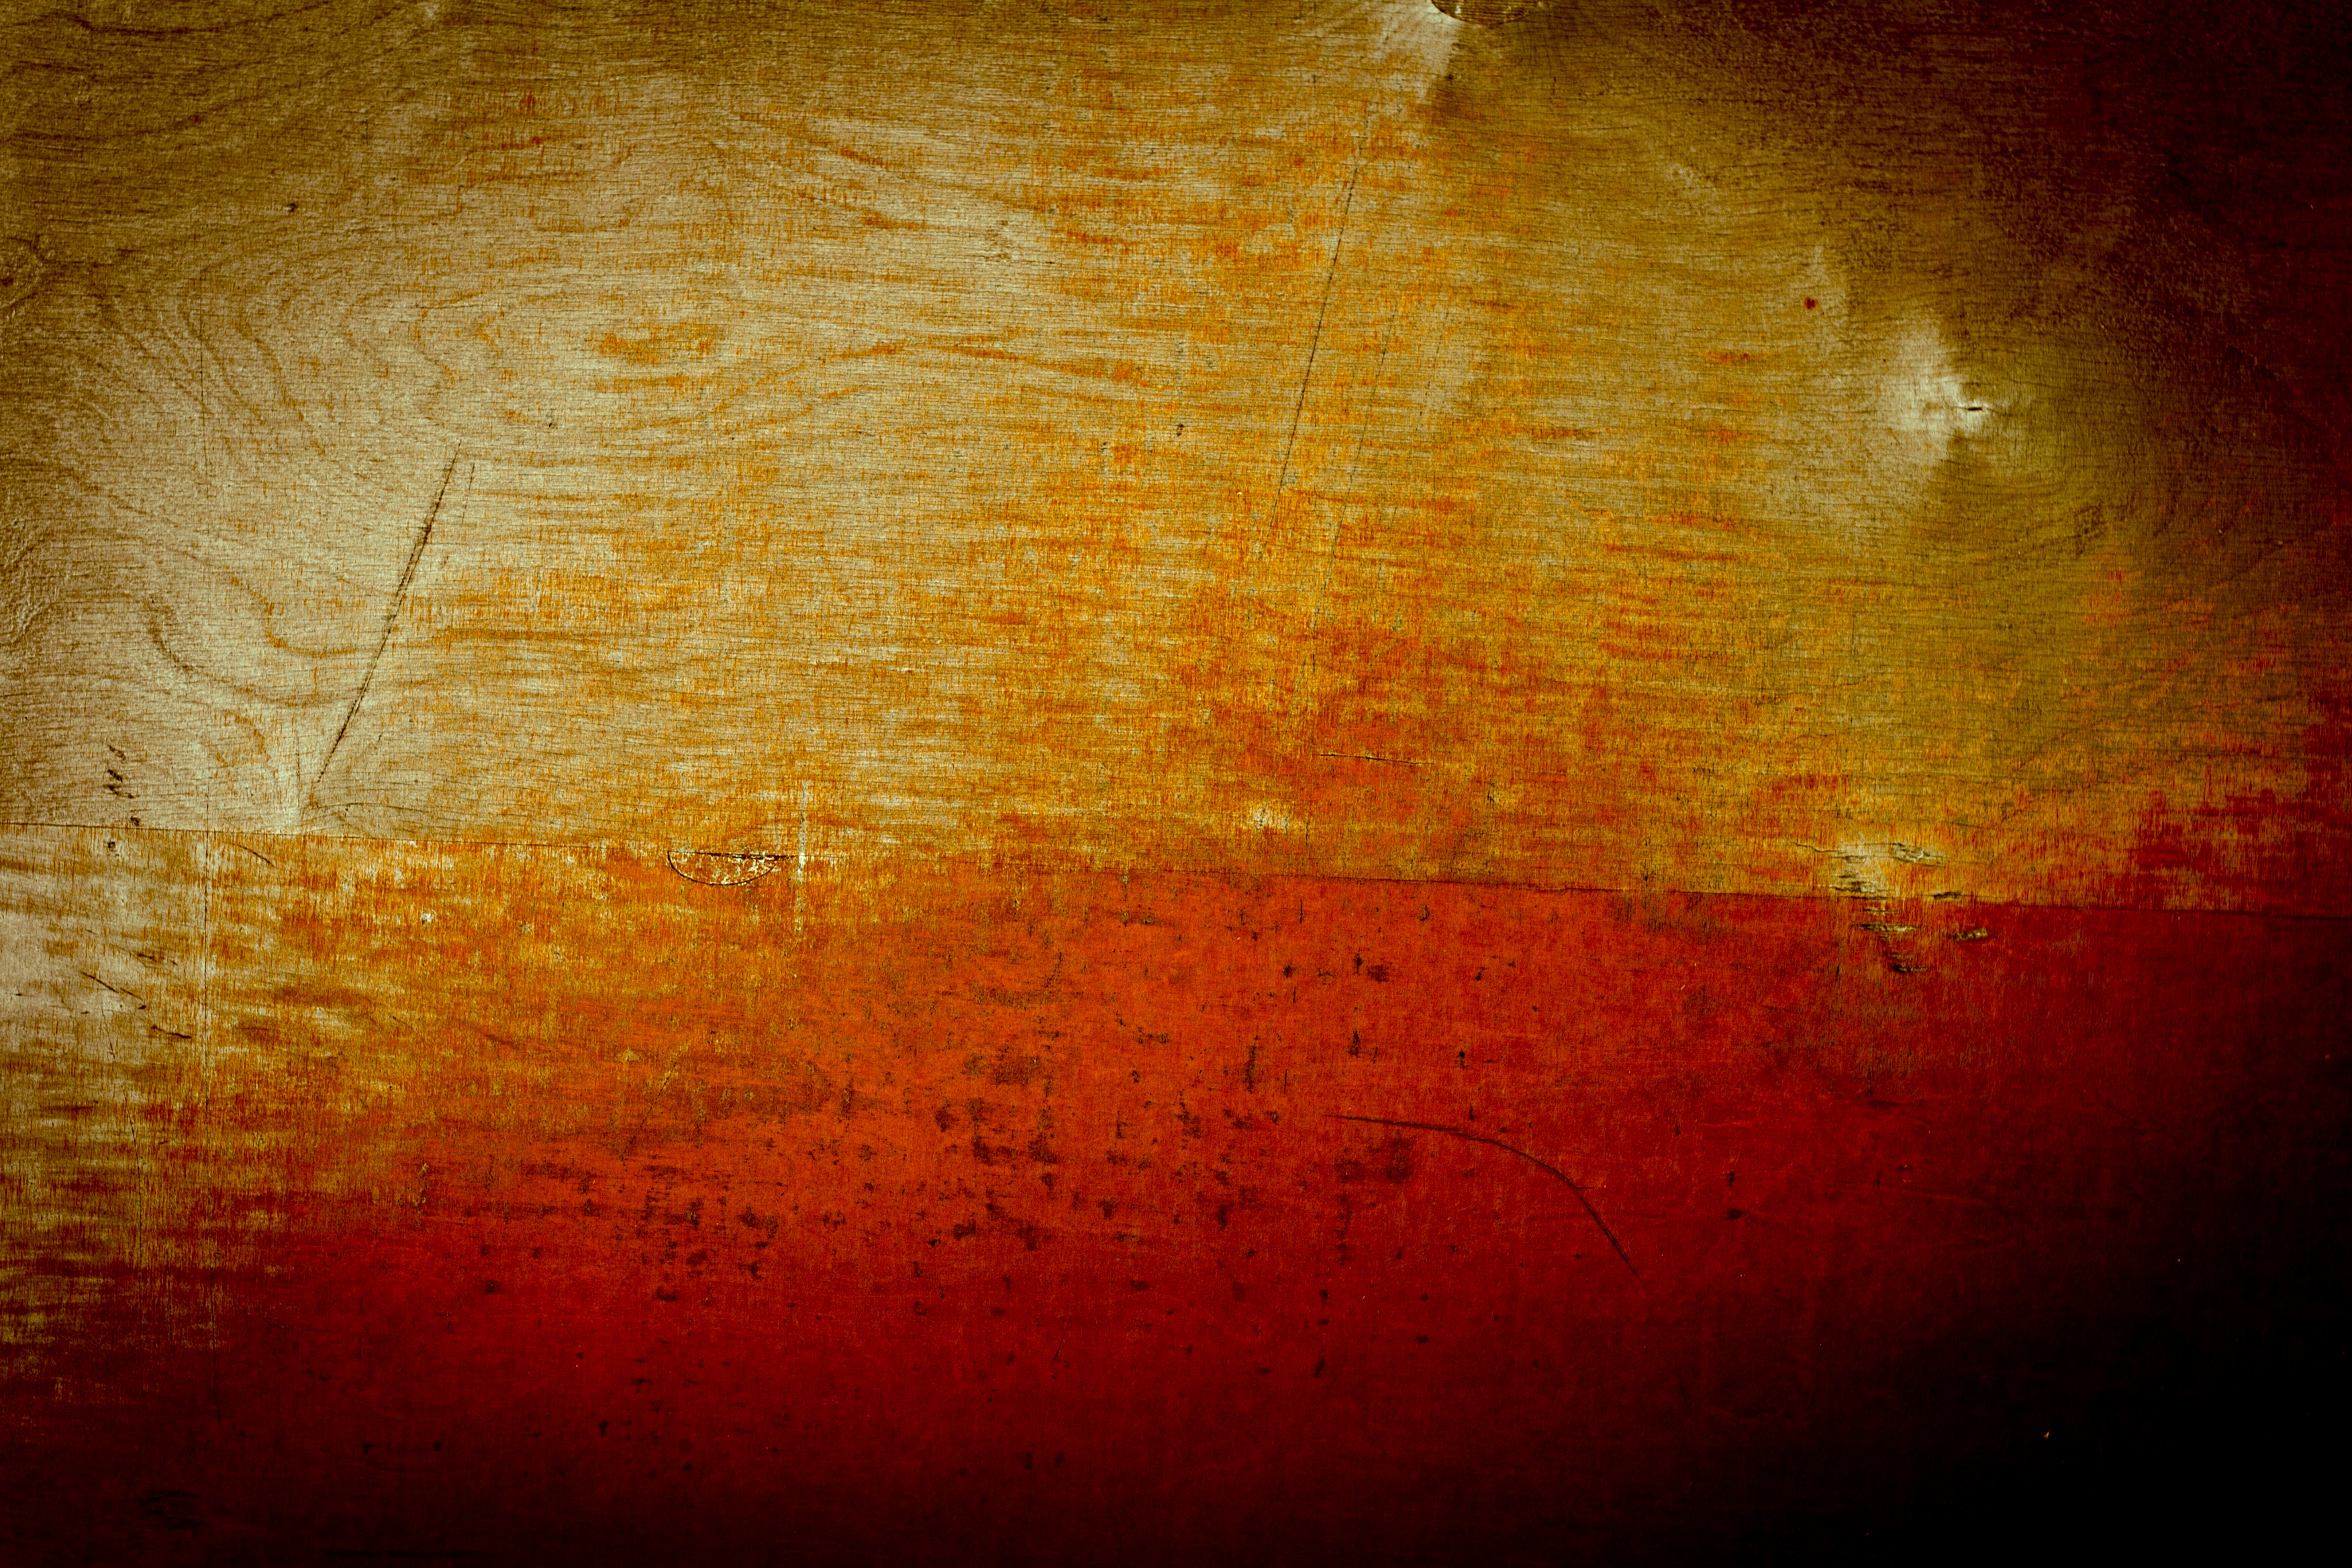 Grunge wood texture photo